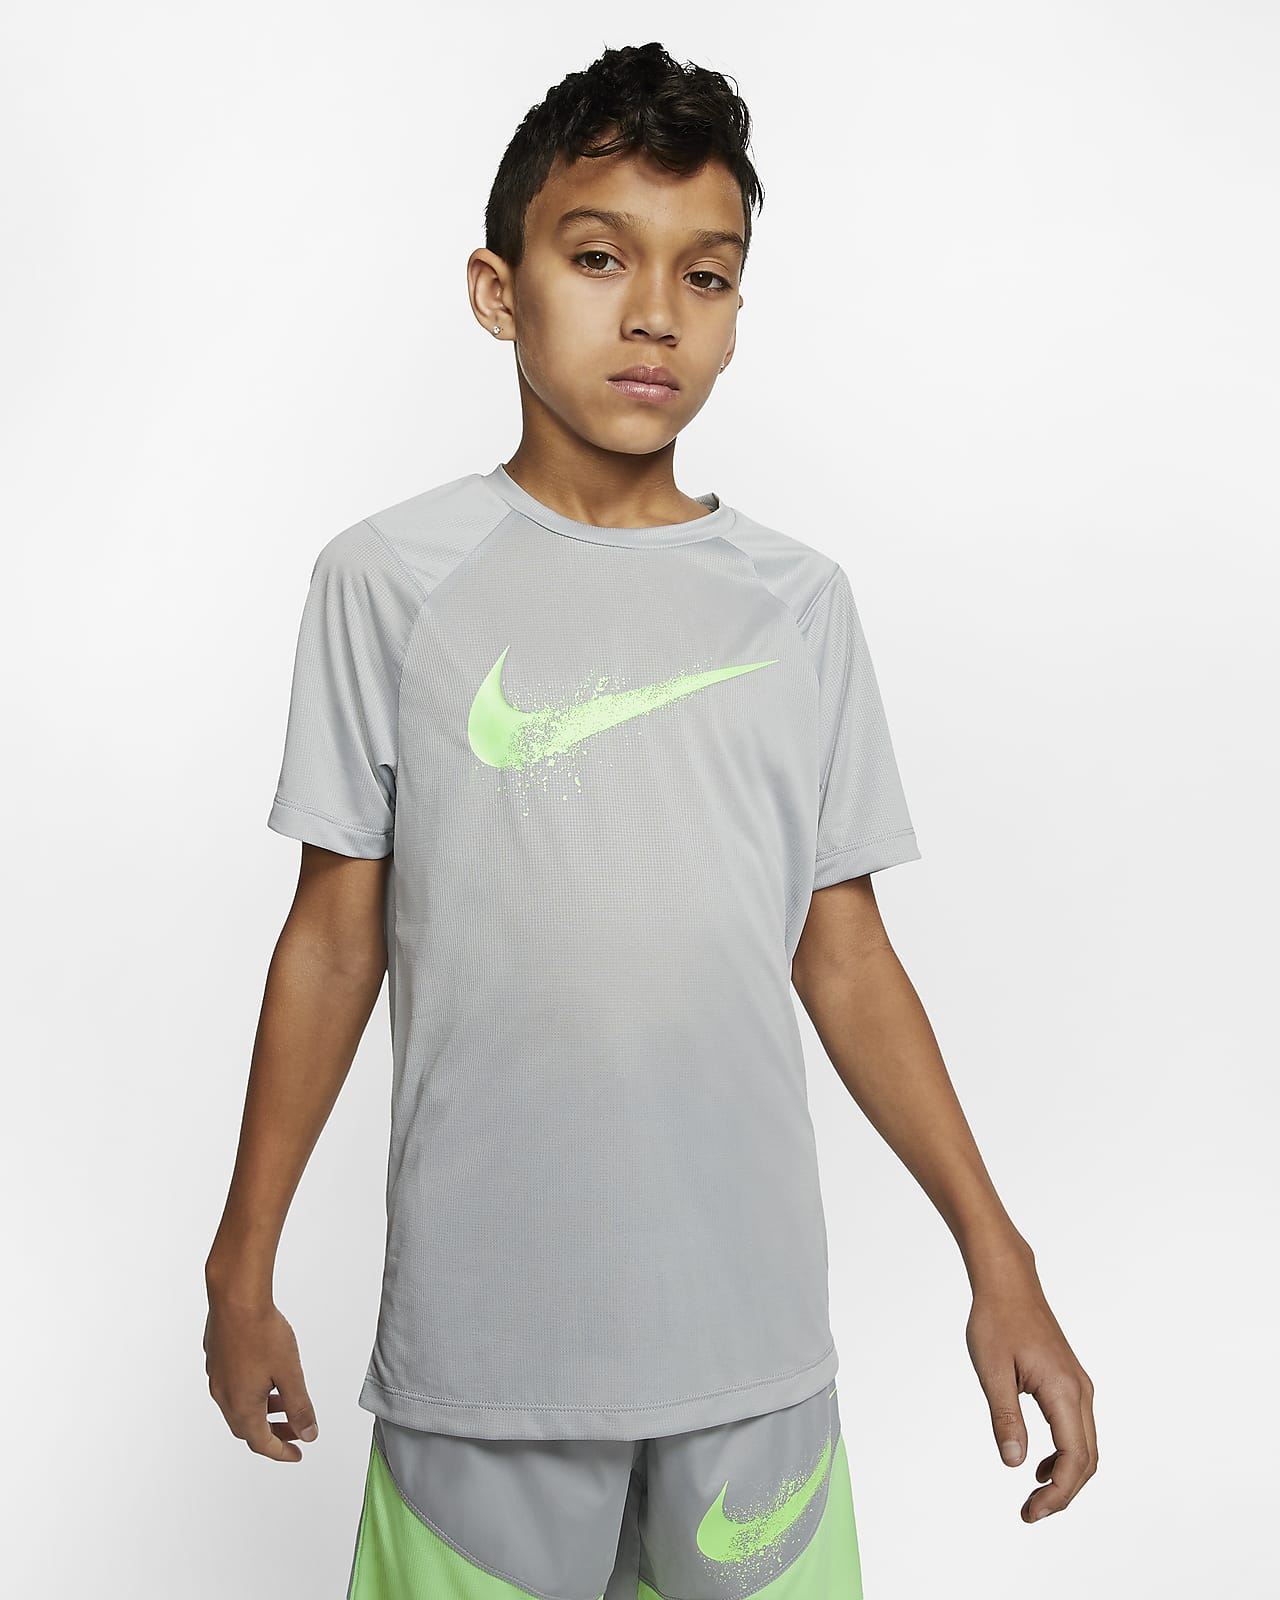 Nike Big Kids' (Boys') Short-Sleeve 